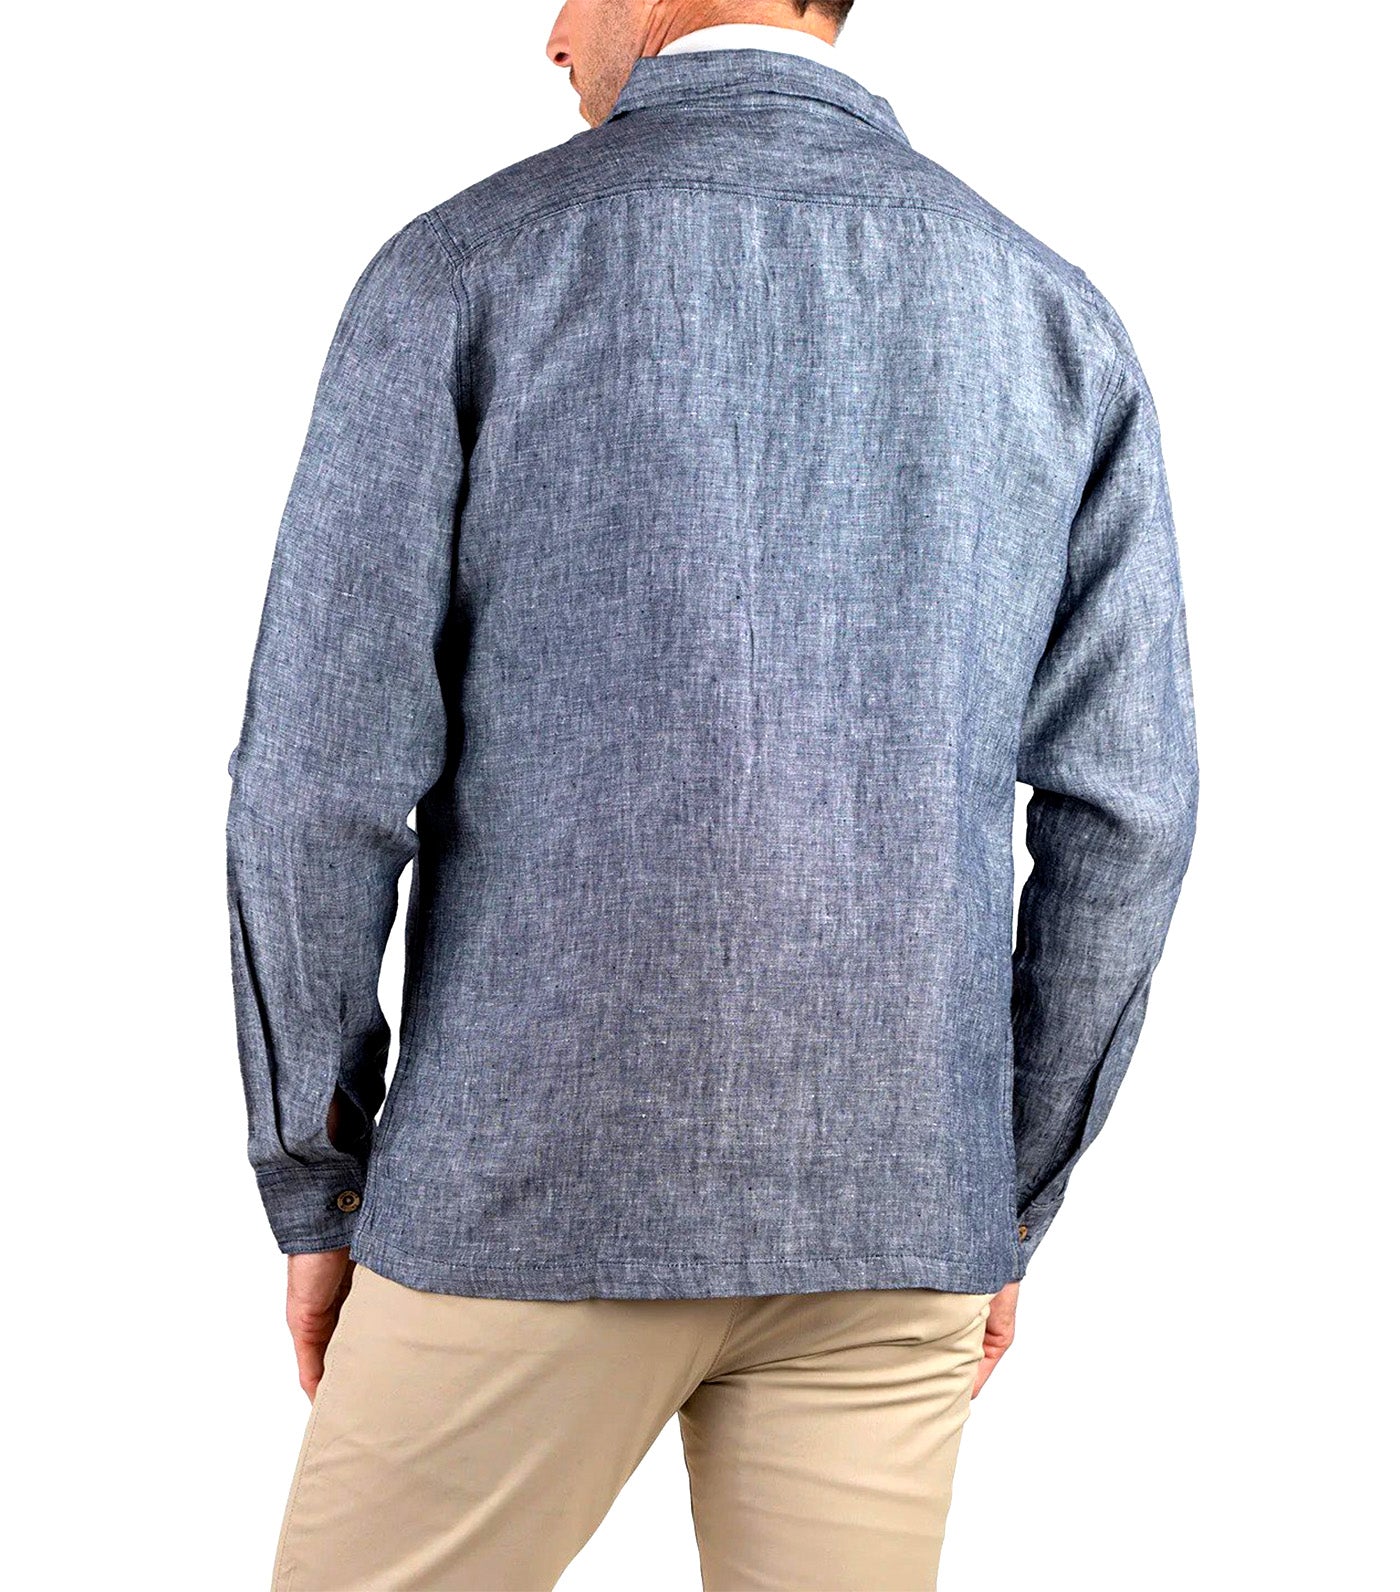 Puretec Cool® Linen Cotton Chore Jacket Navy Blazer